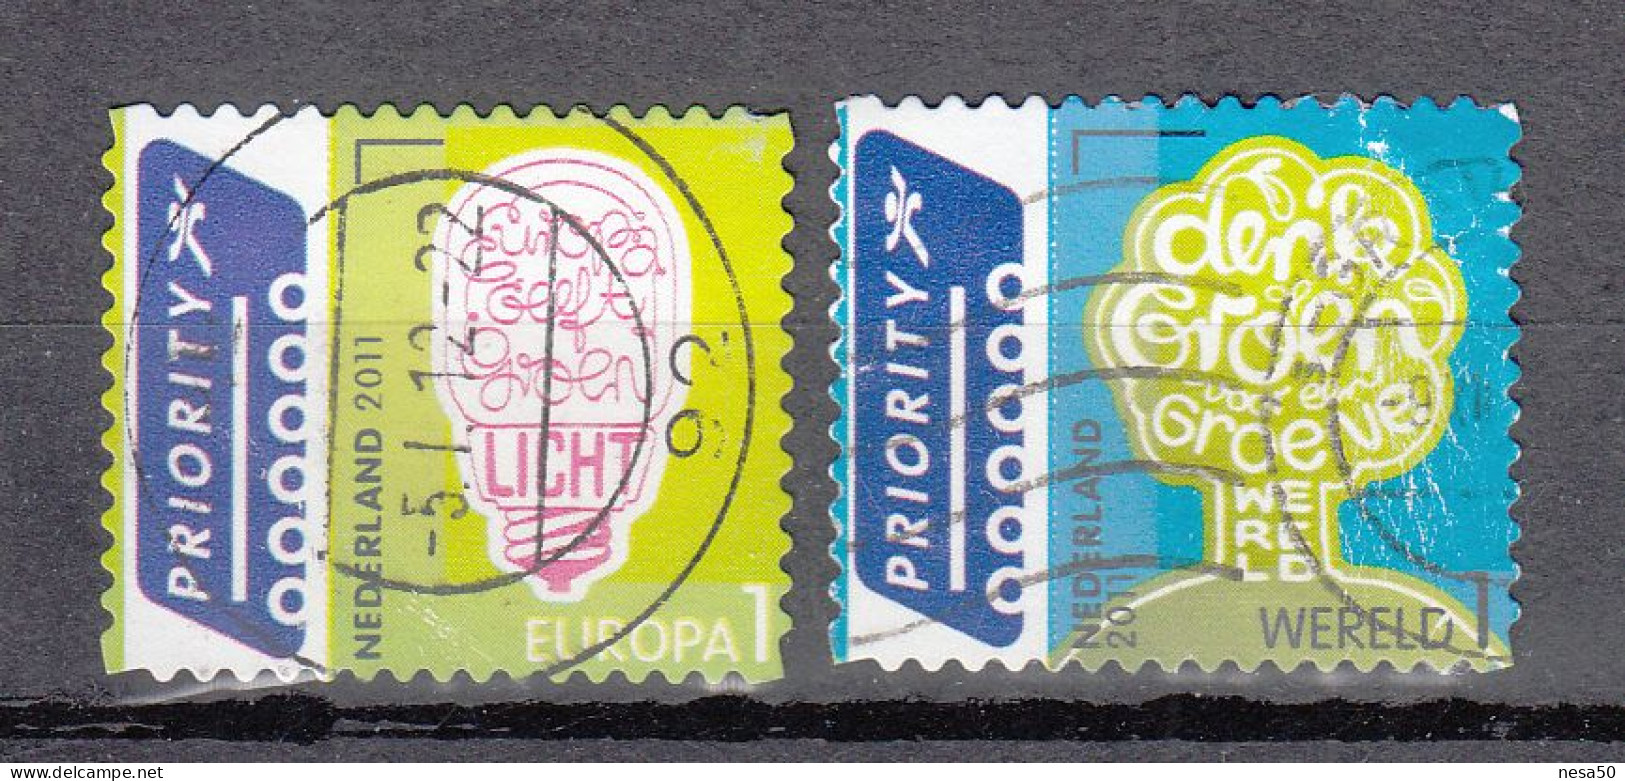 Nederland 2011 Nvph Nr 2866 + 2867 , Mi Nr 2903 + 2904 , Europa + Wereld, Denk Groen - Used Stamps